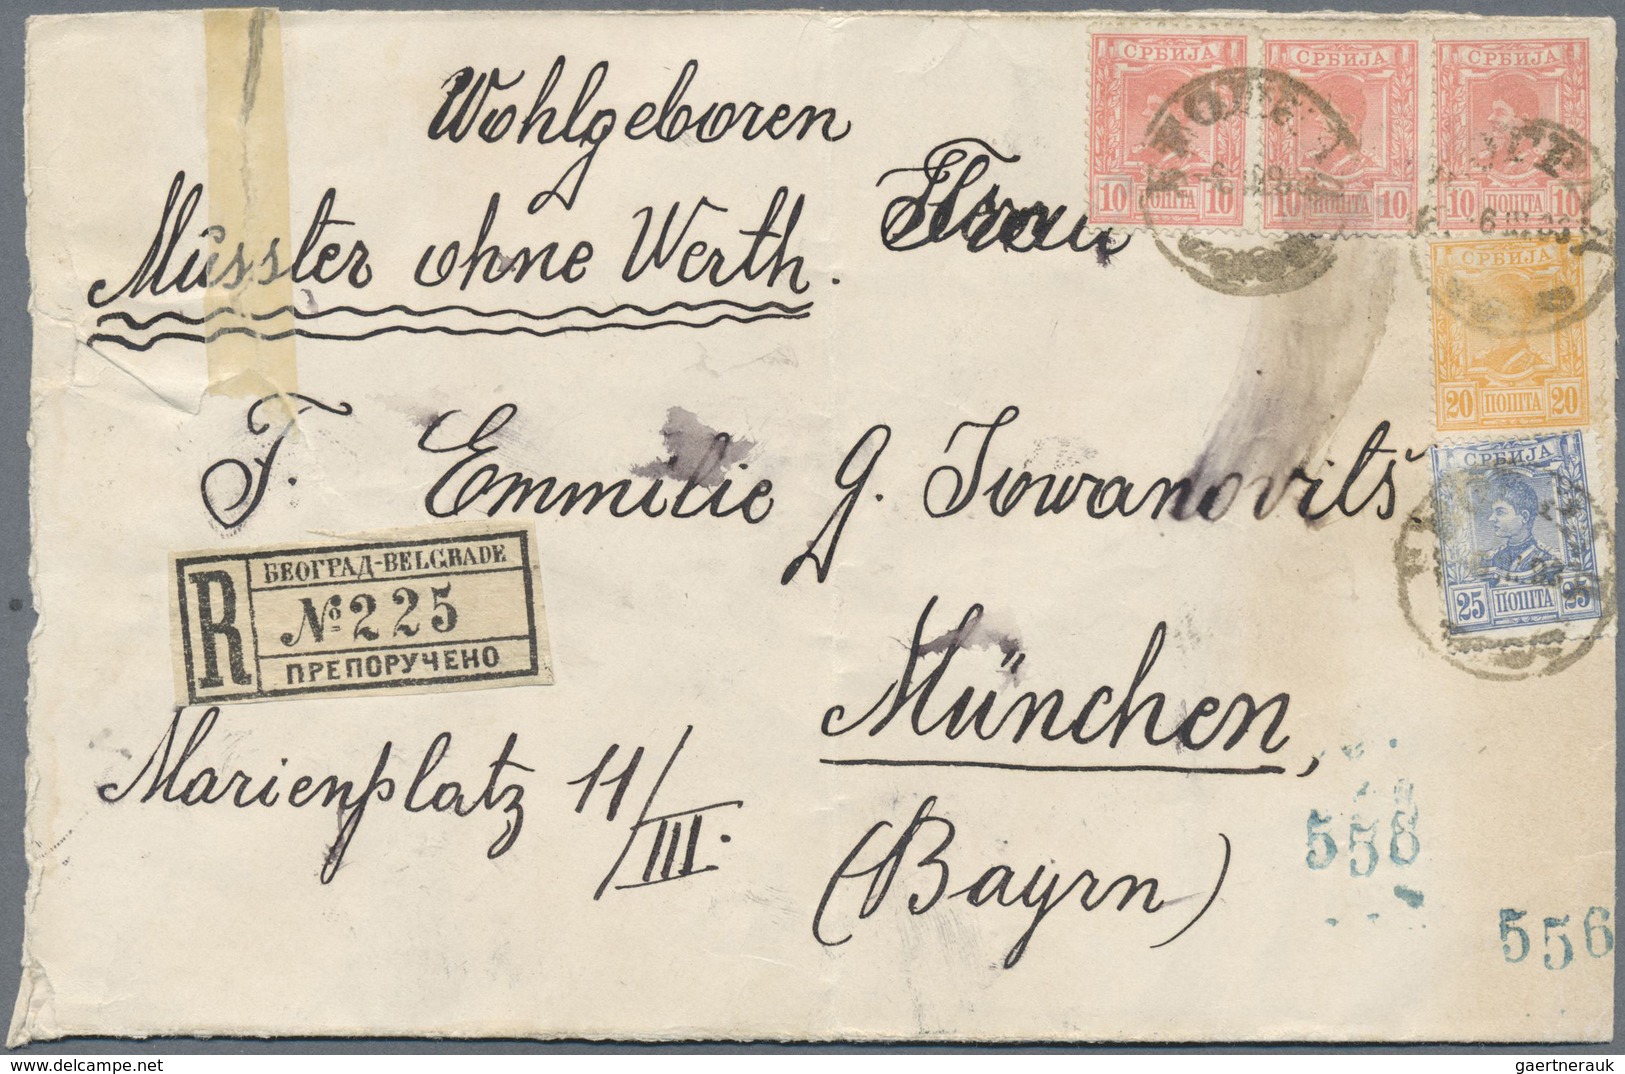 Br Serbien: 1893, Sample Without Value "Muster Ohne Wert" Sent Registered From BELGRADE To Munich. Tear - Serbie